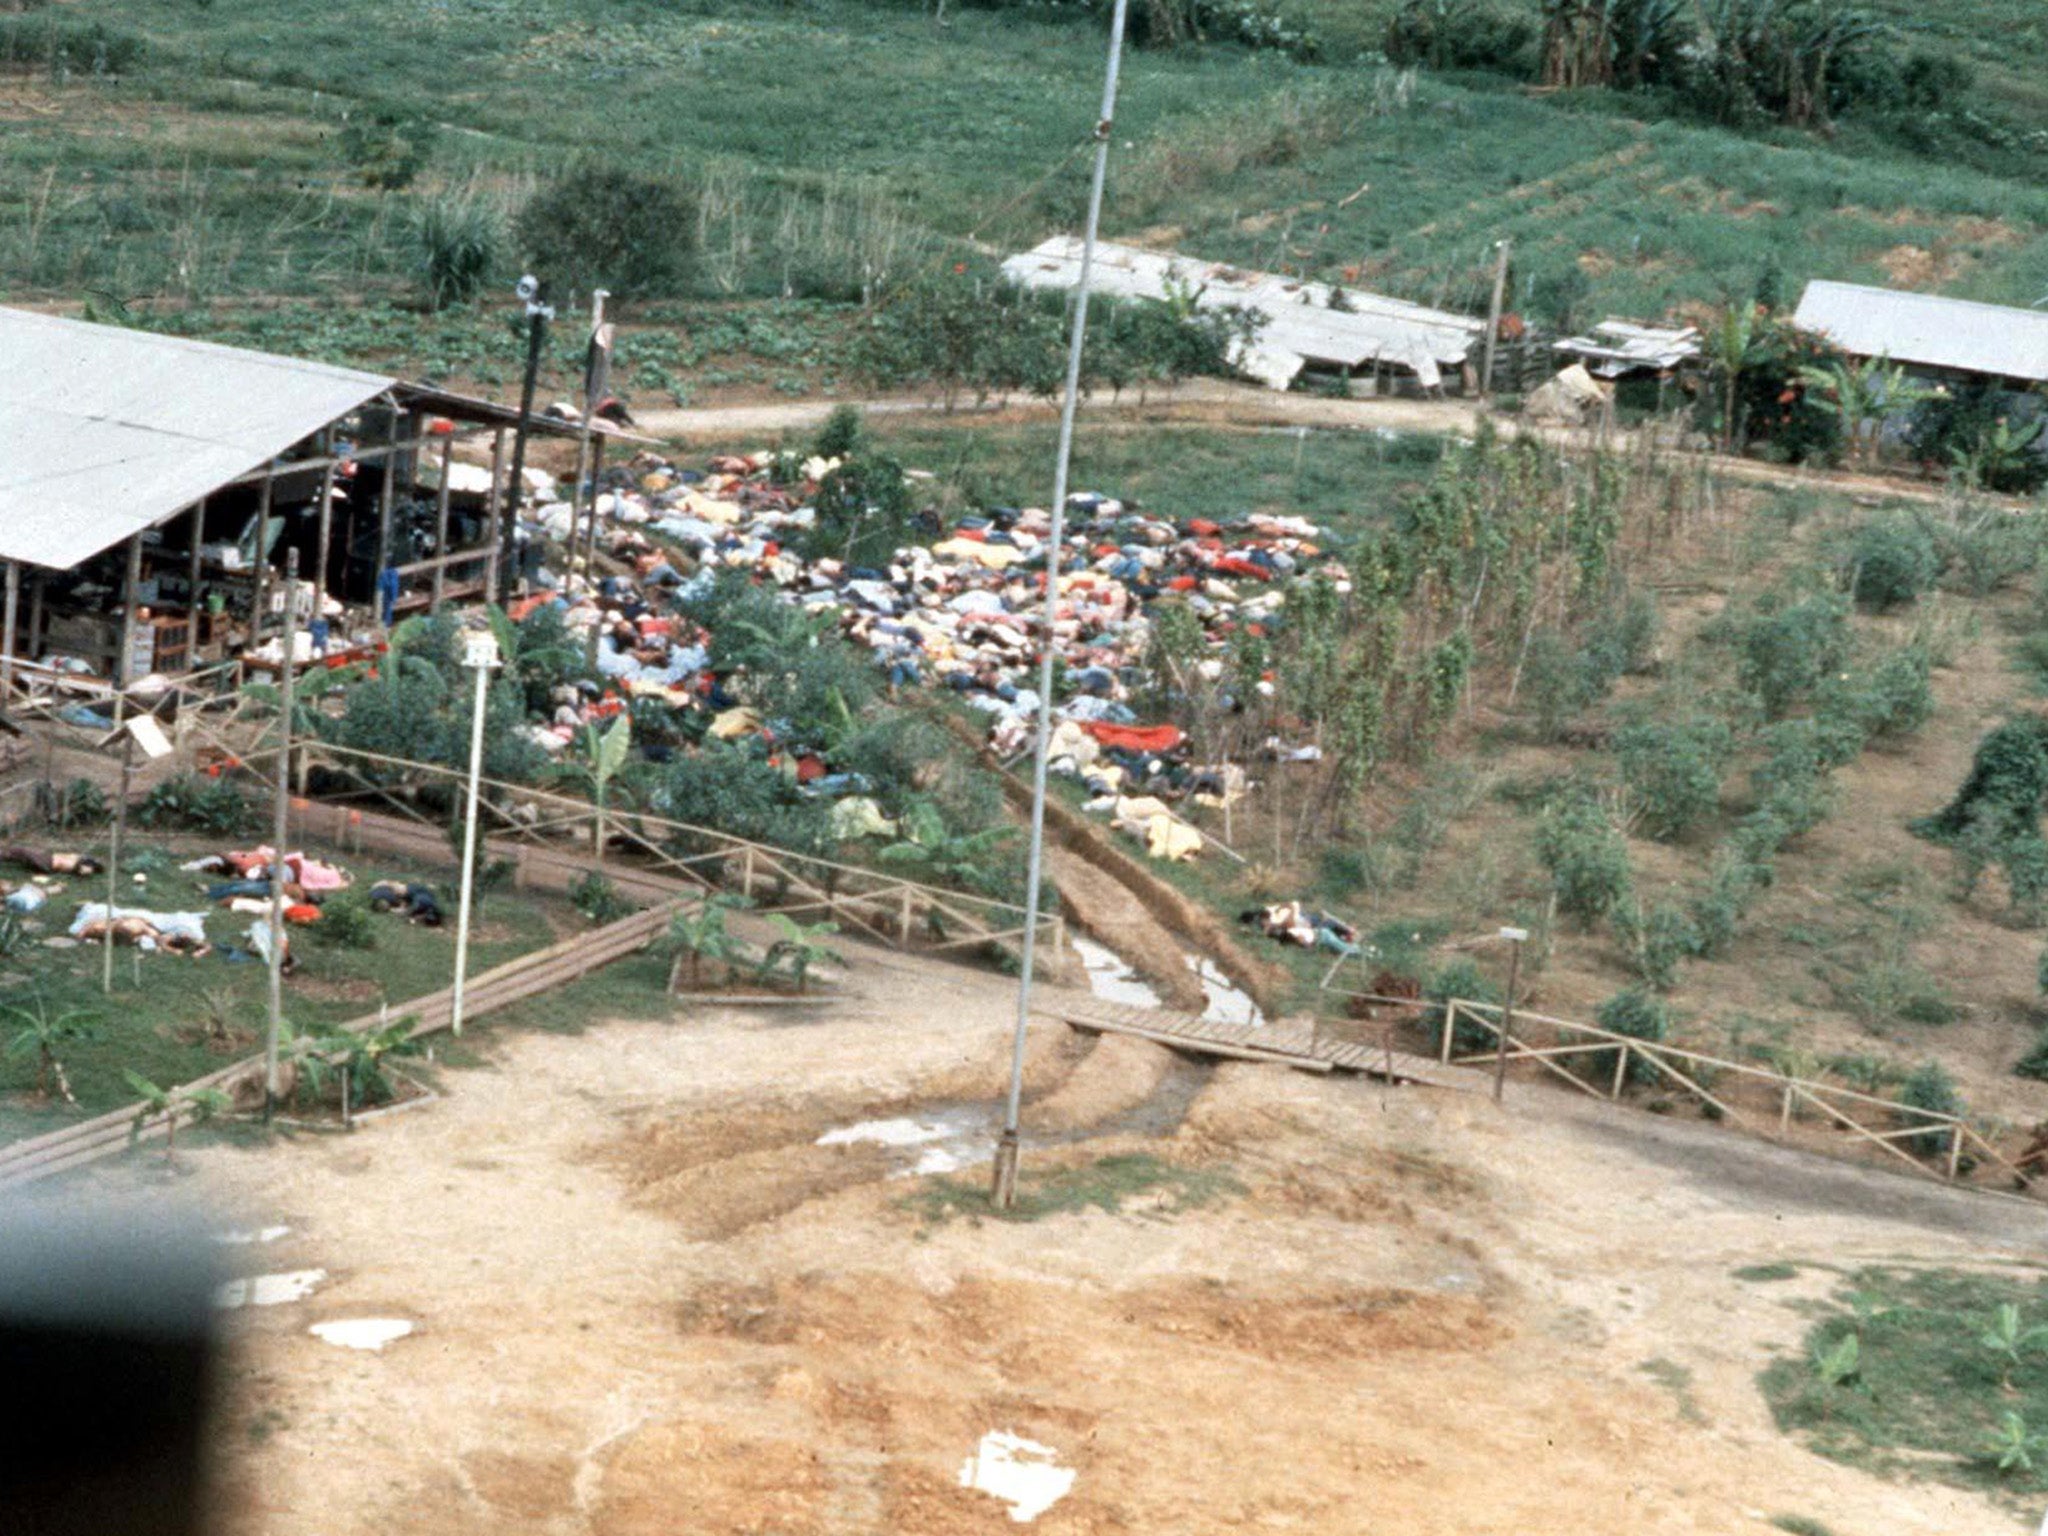 Over 900 dead bodies were found when investigators and journalists returned to Jonestown